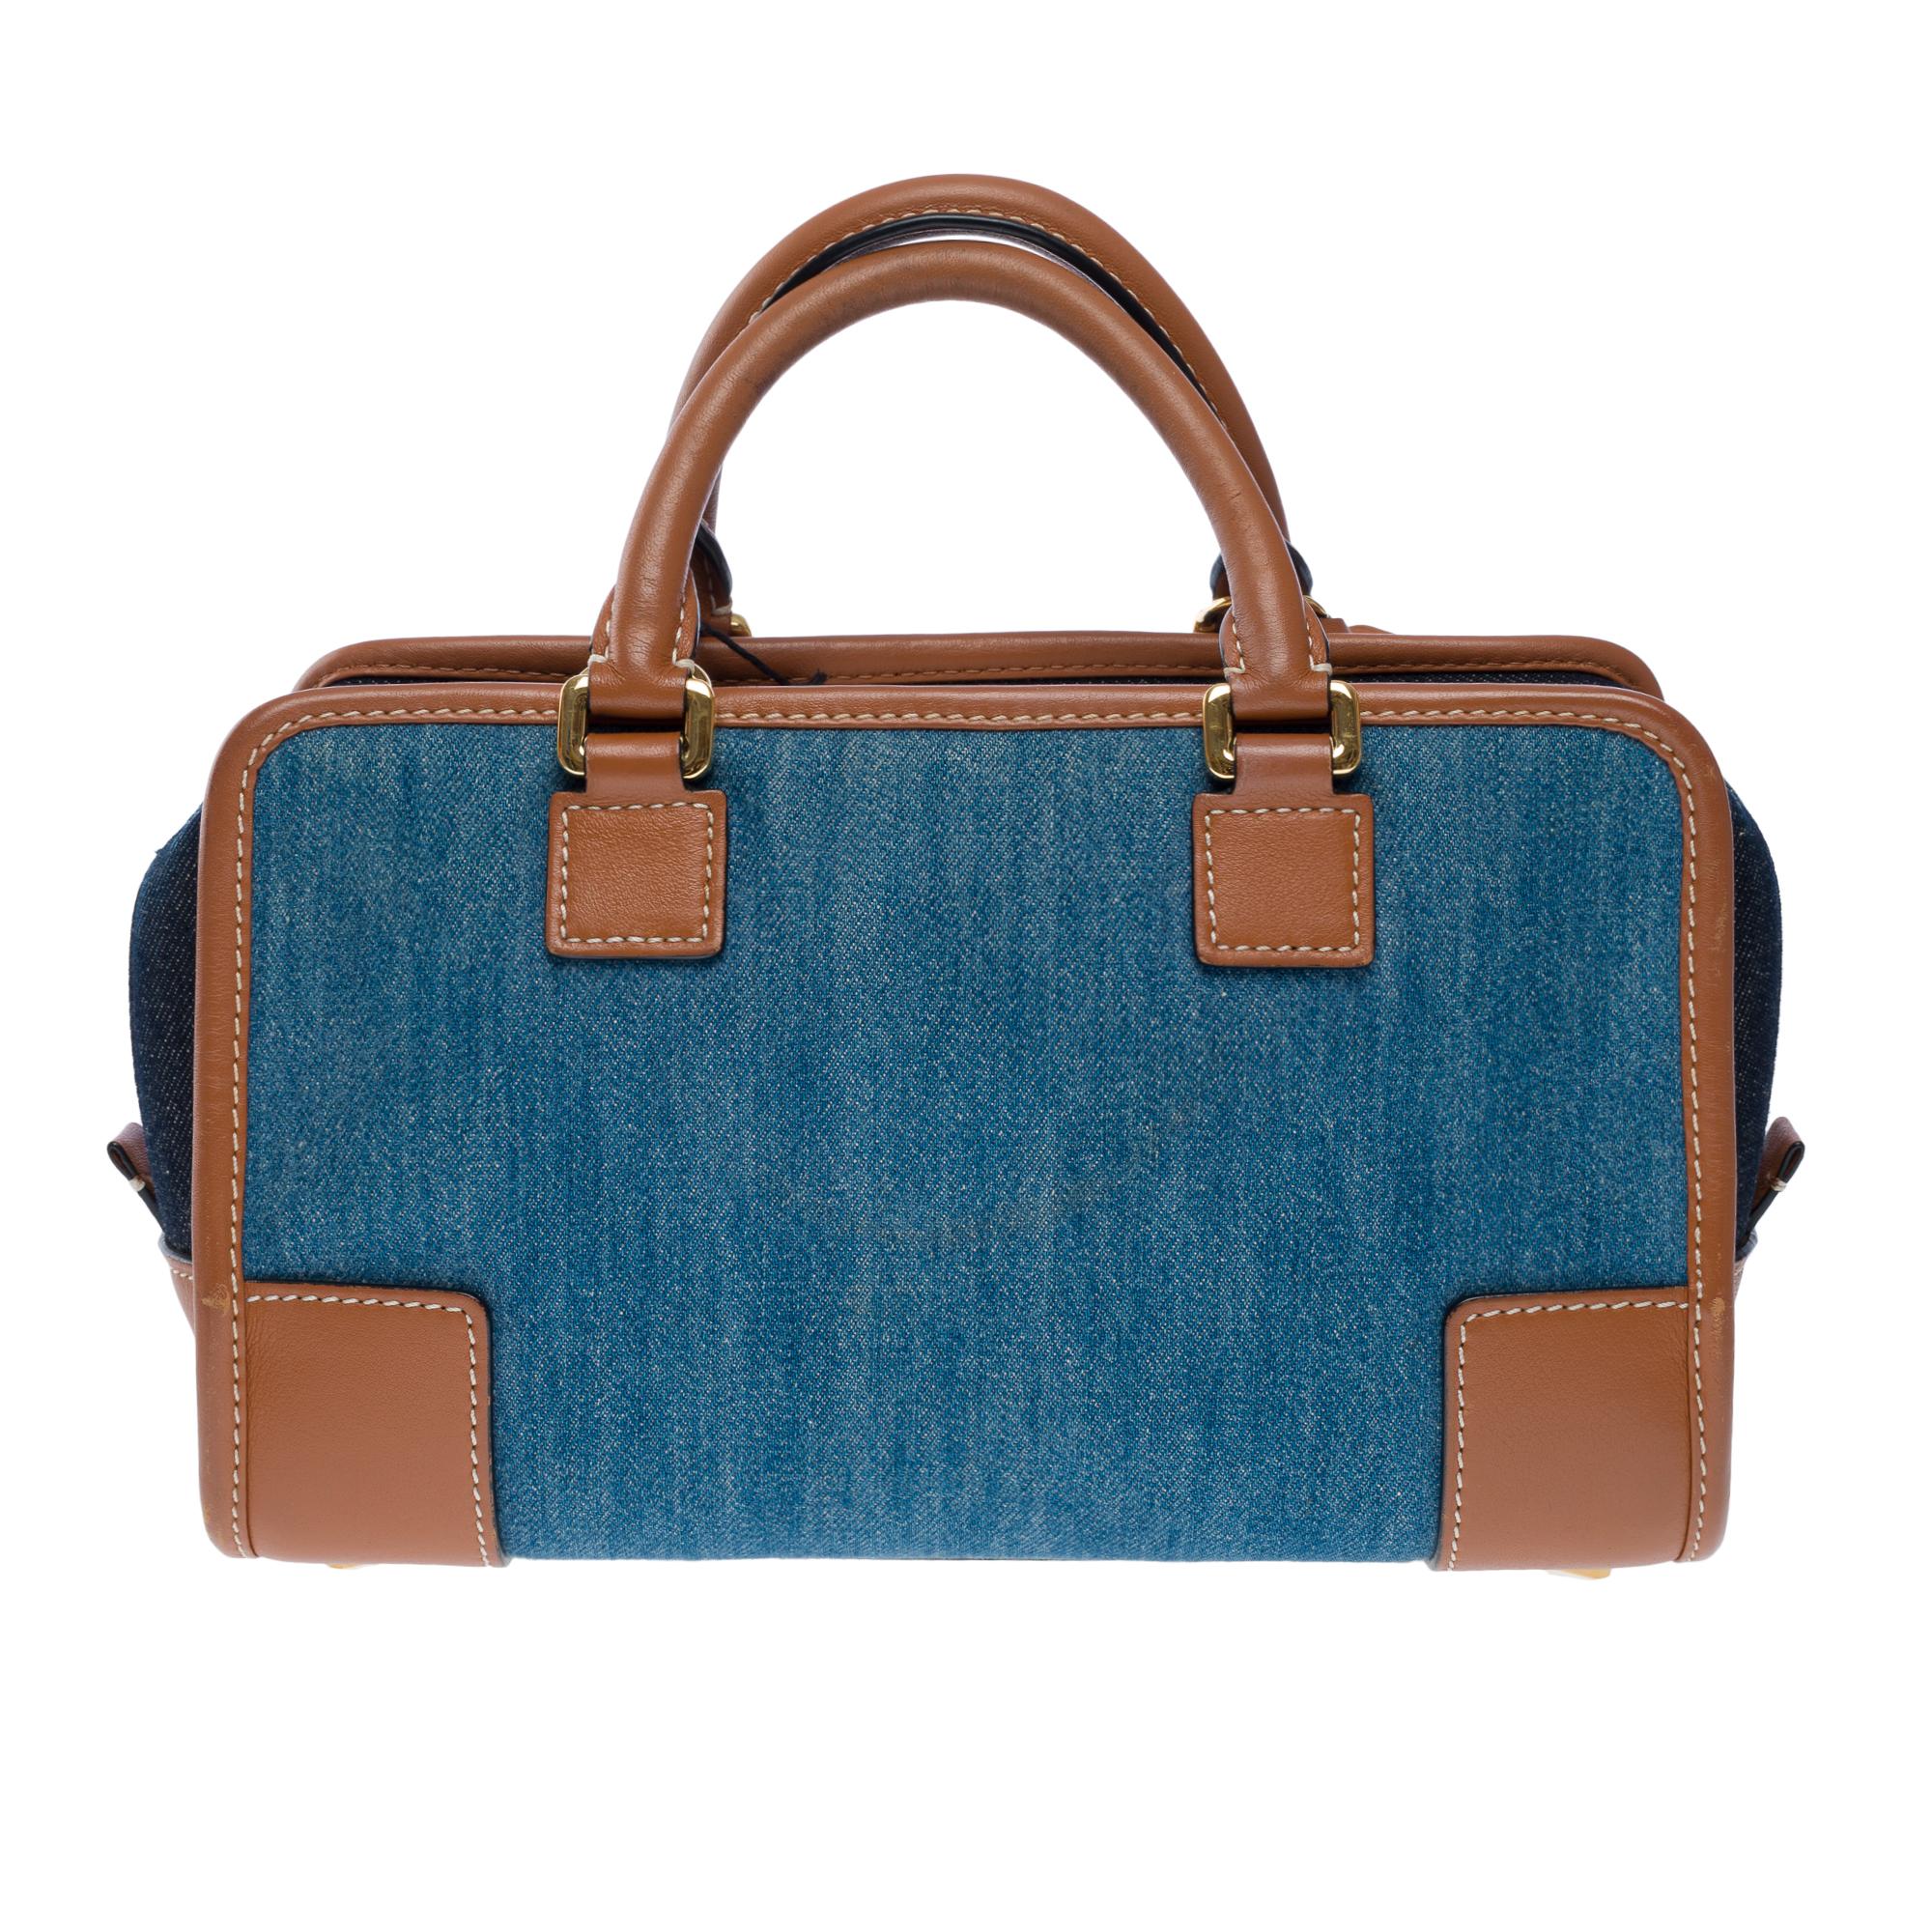 Women's Loewe Amazona 23 2 Way handbag in denim and brown leather, GHW